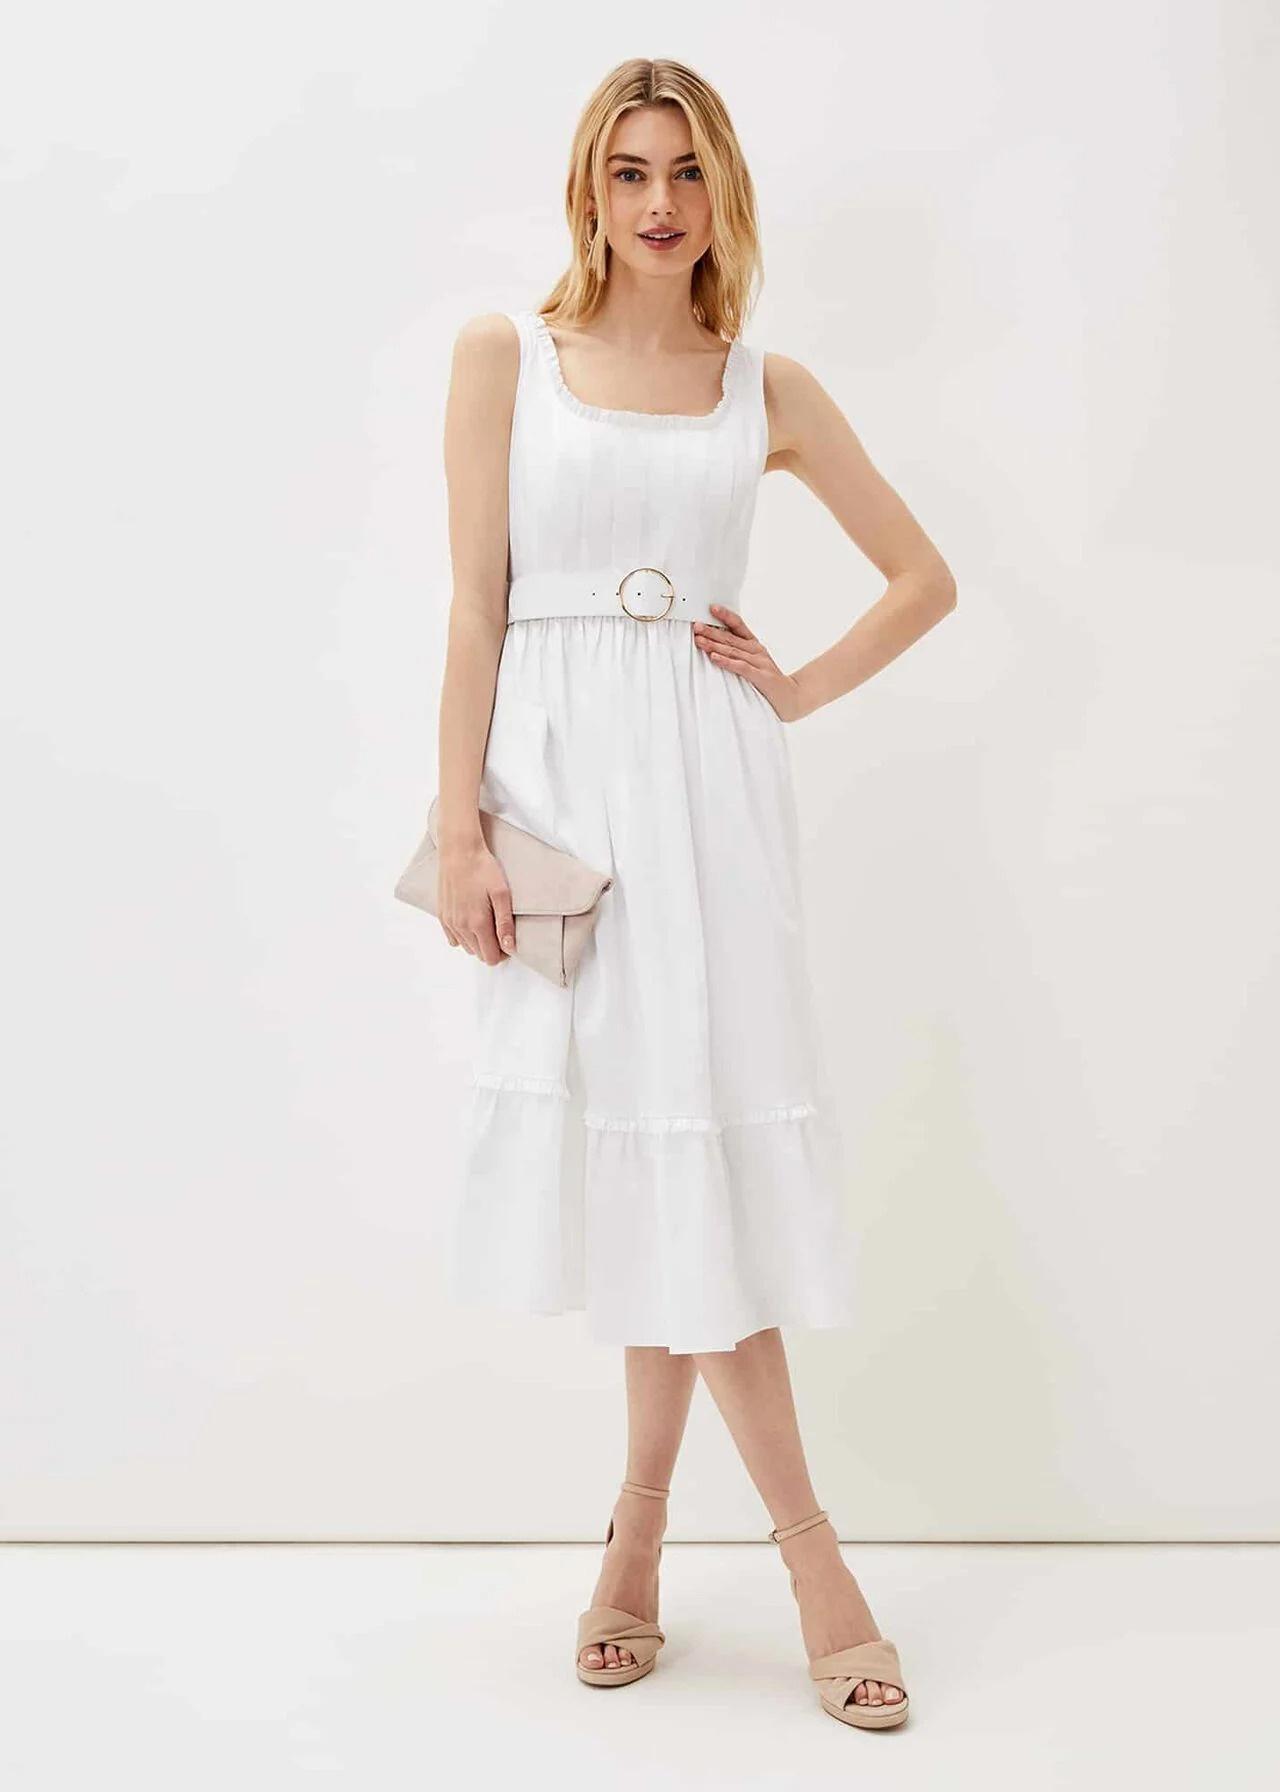 Model wearing a belted causal short wedding dress